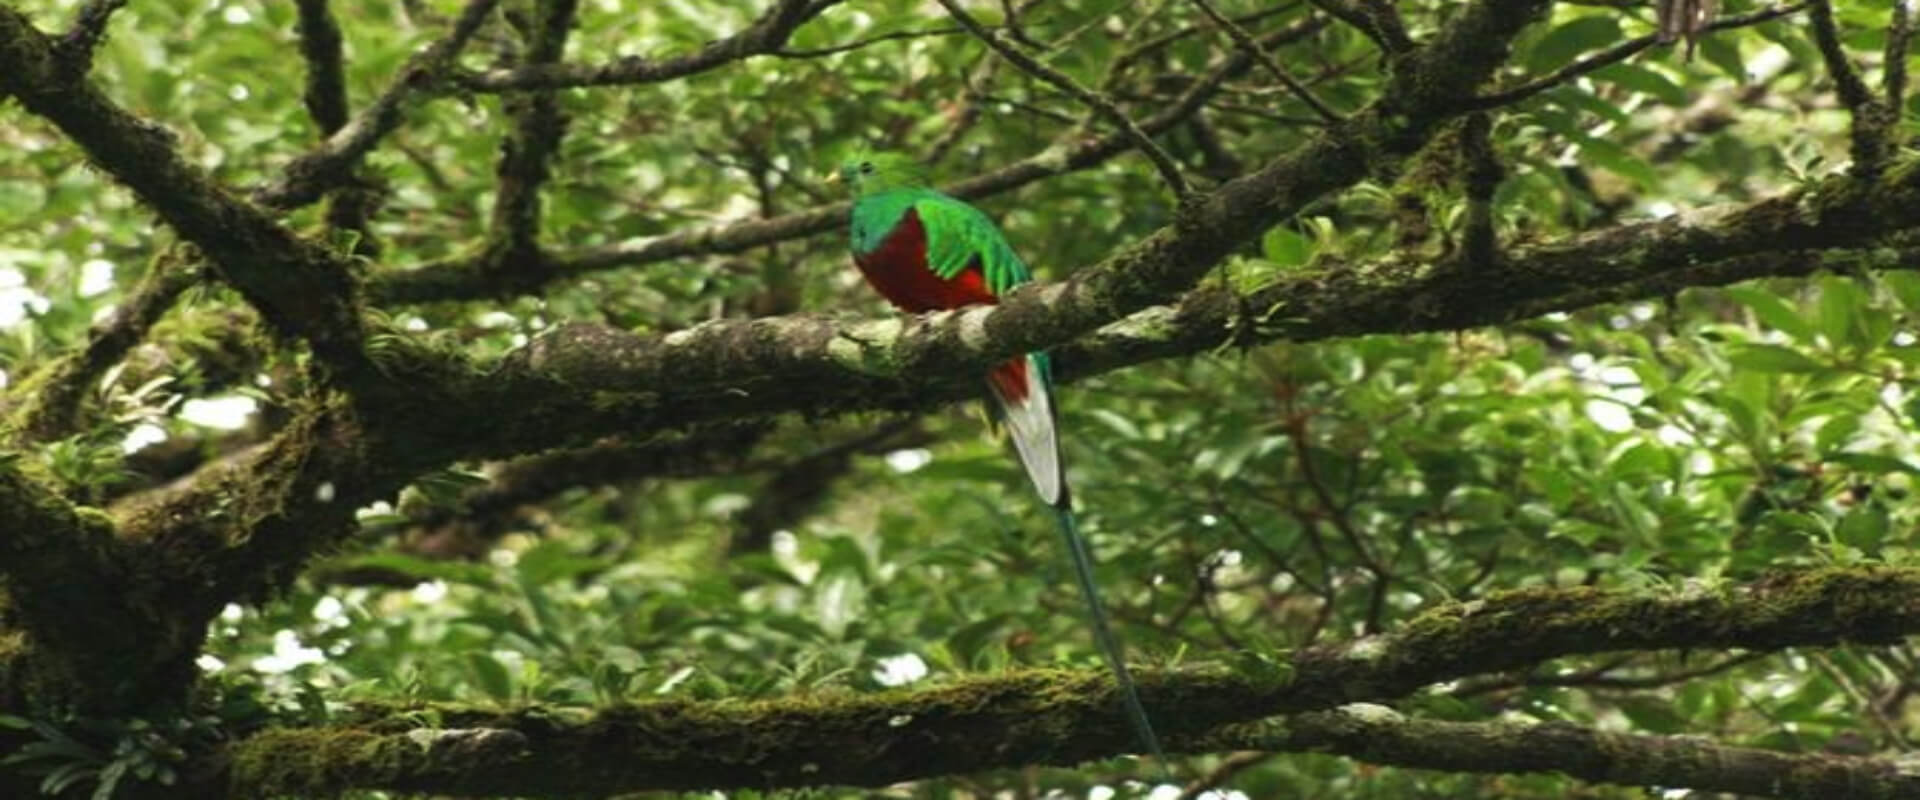 Reserva Natural Curi-Cancha | Costa Rica Jade Tours